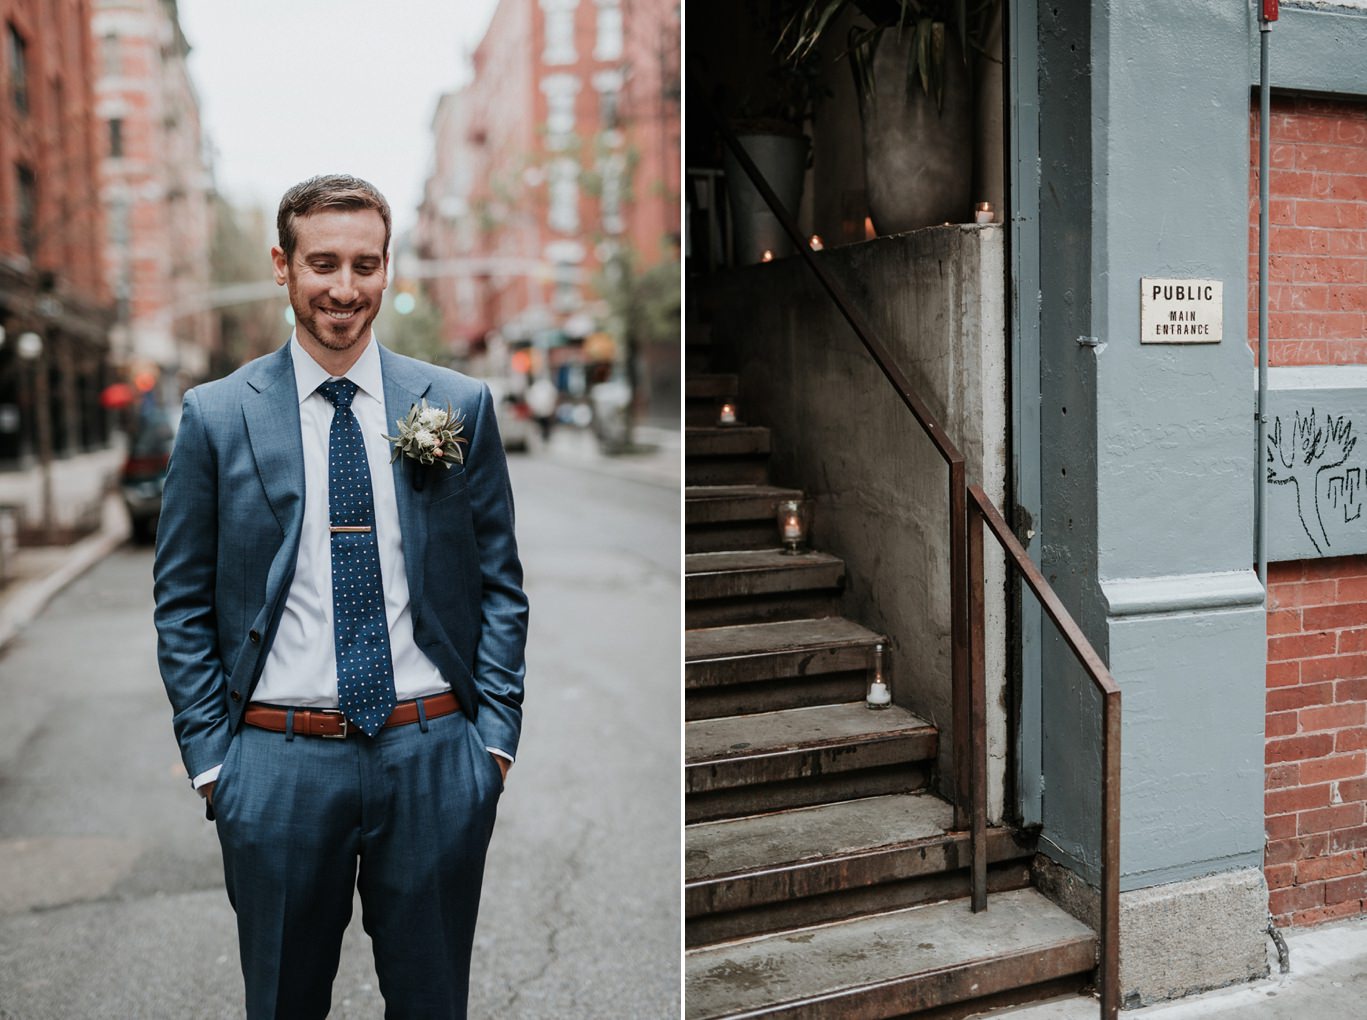 public restaurant wedding groom blue suit